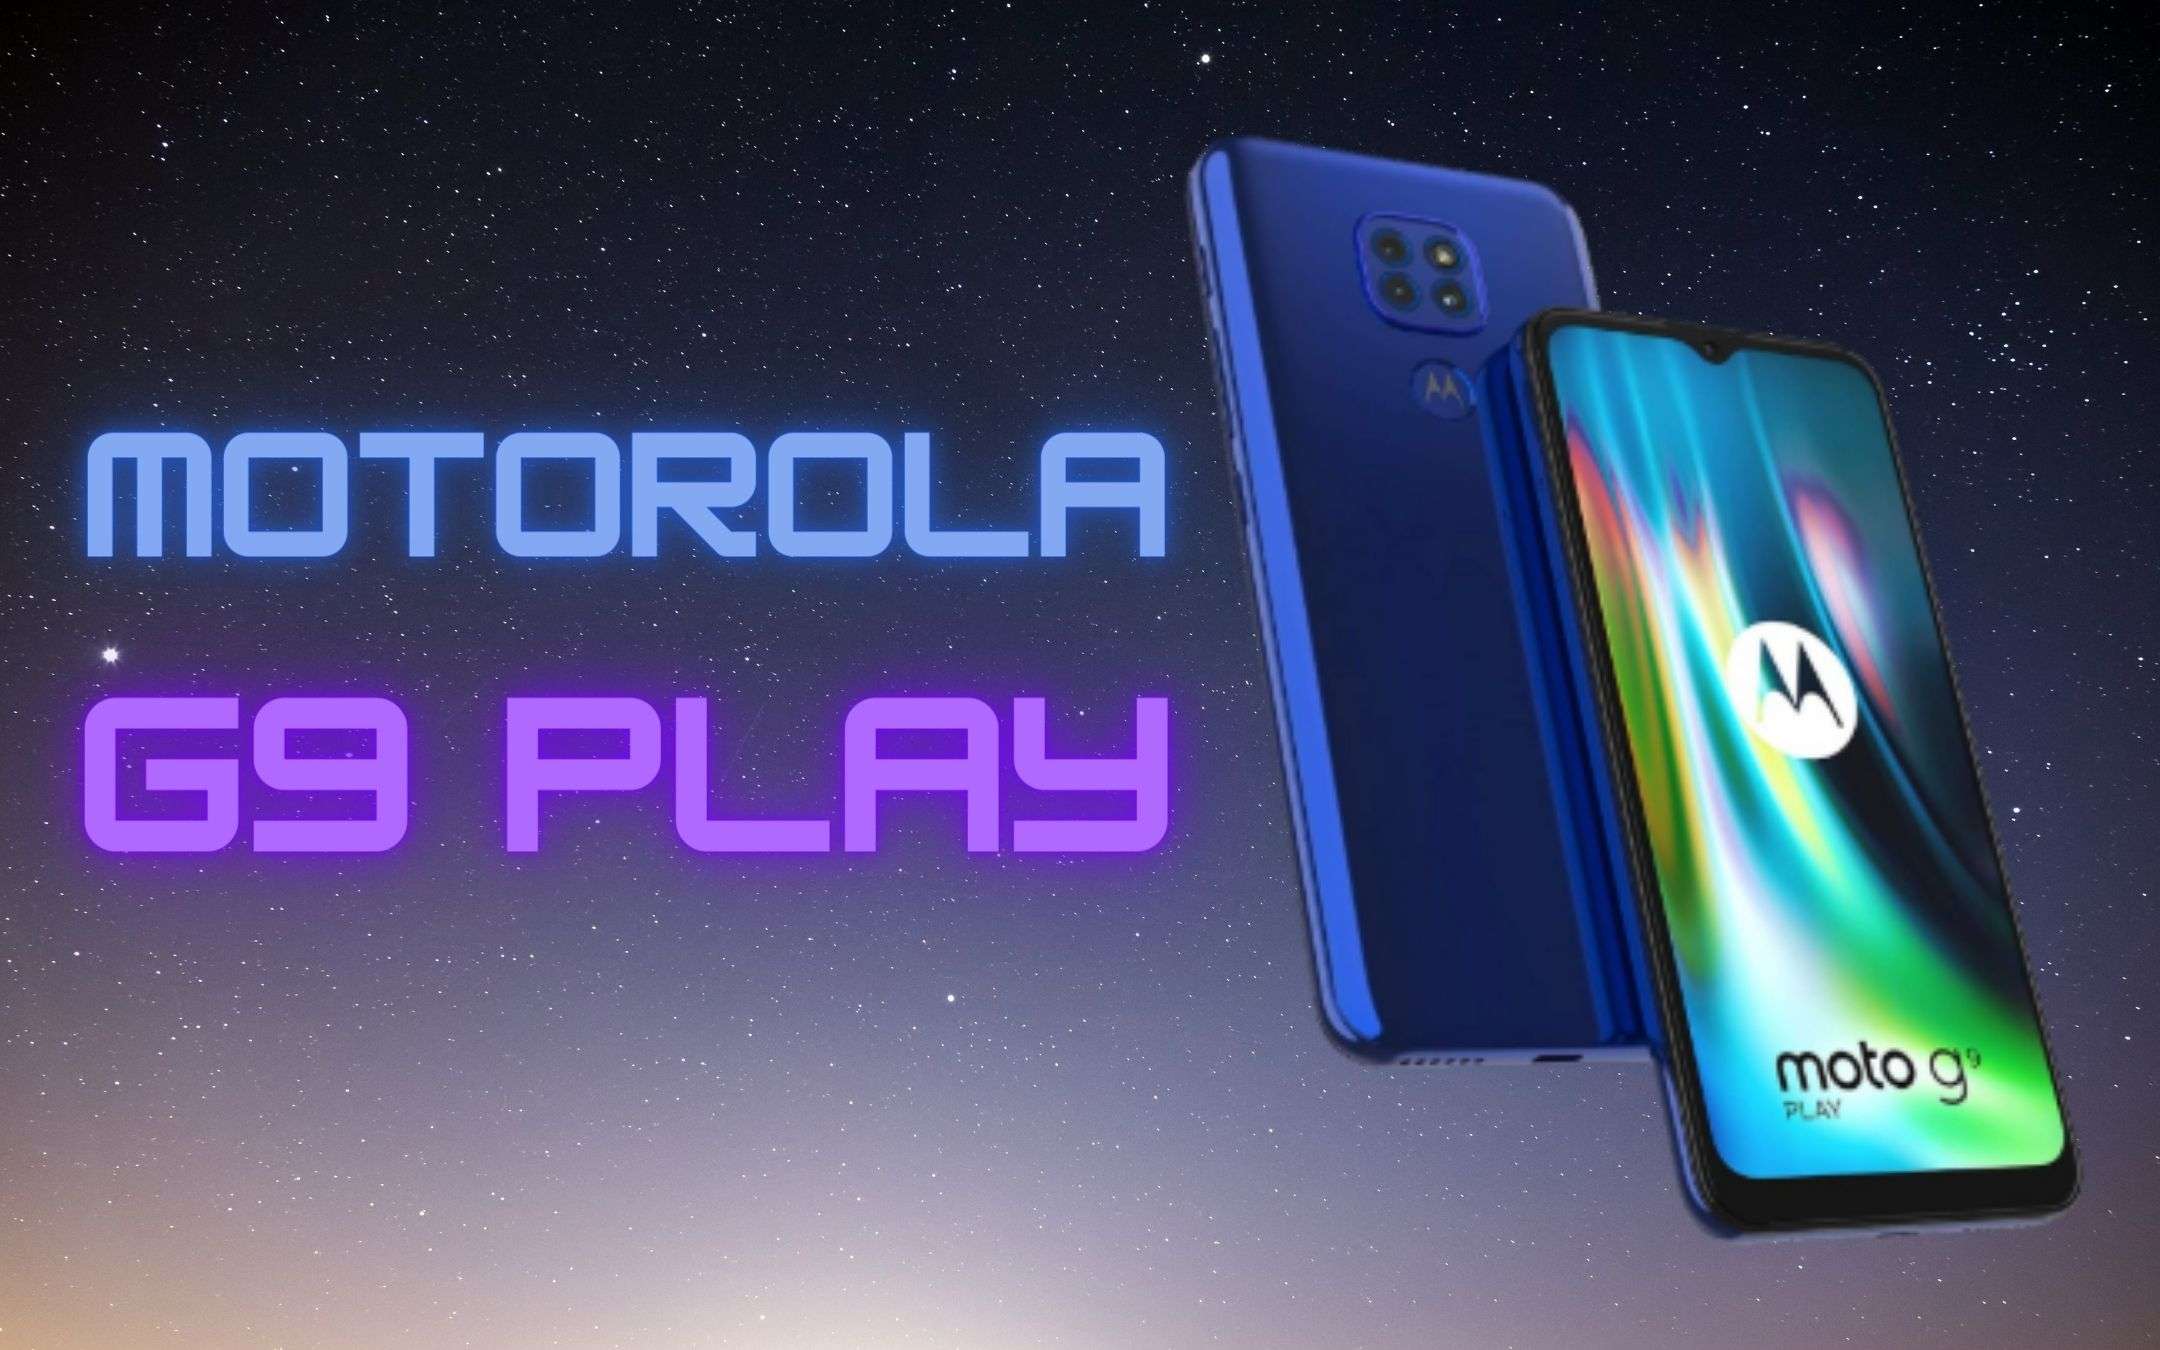 Motorola G9 Play su Amazon con uno sconto di 80€